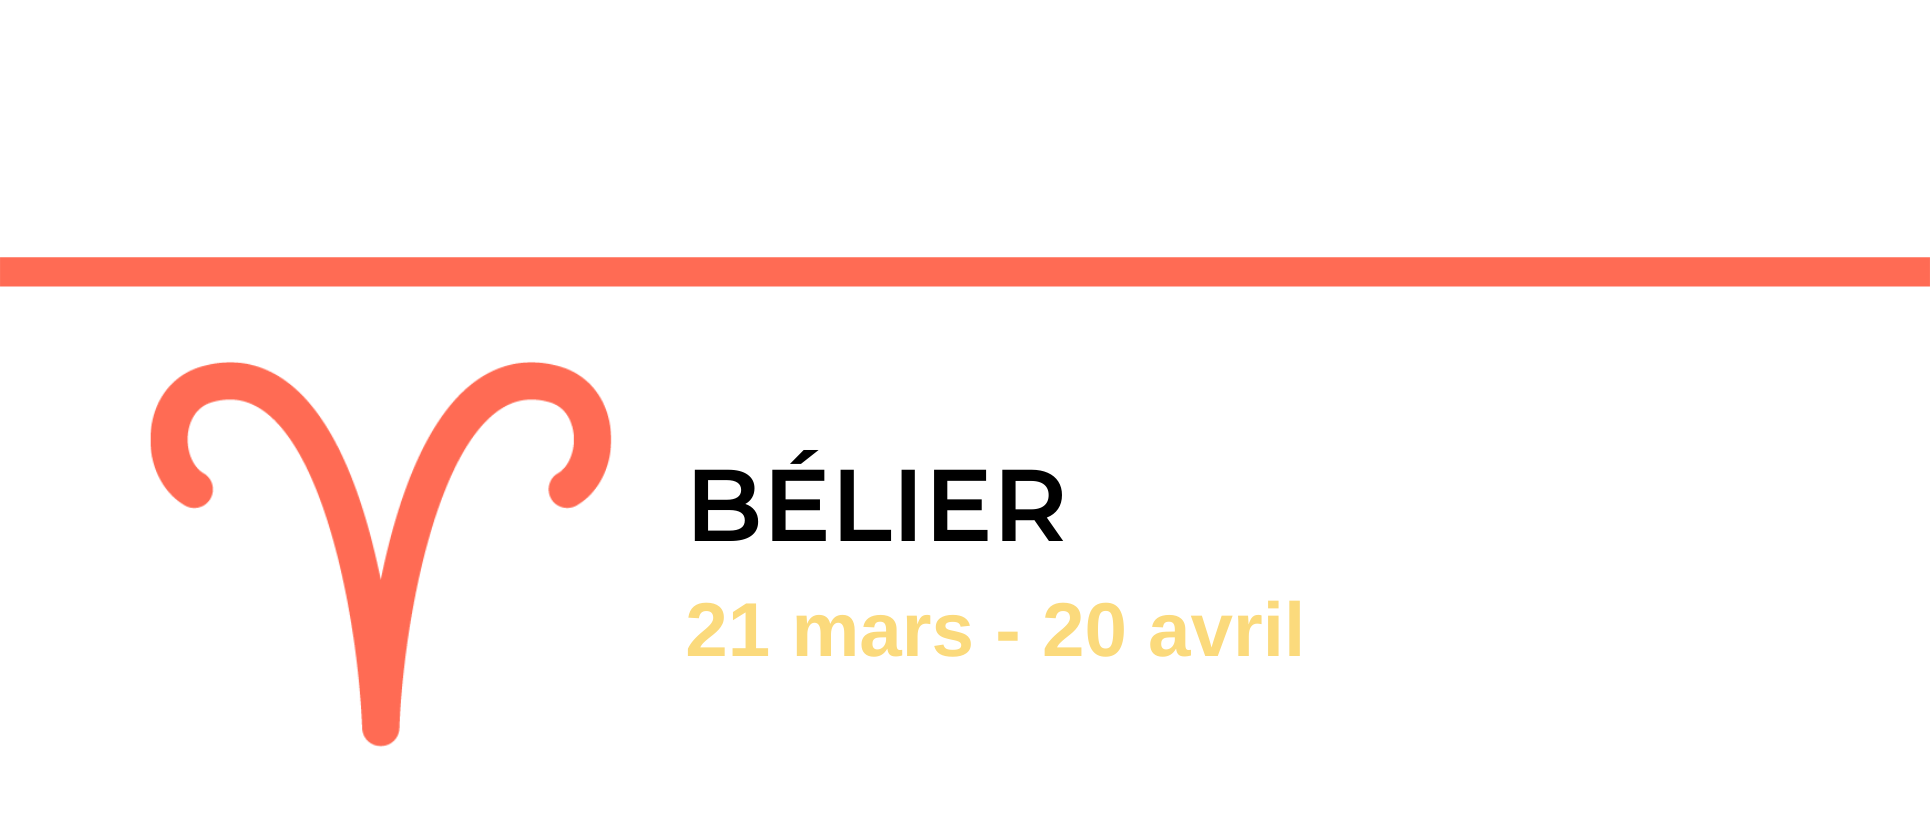 Boco'scope : L'horoscope zéro déchet du Bélier (21 mars - 20 avril)